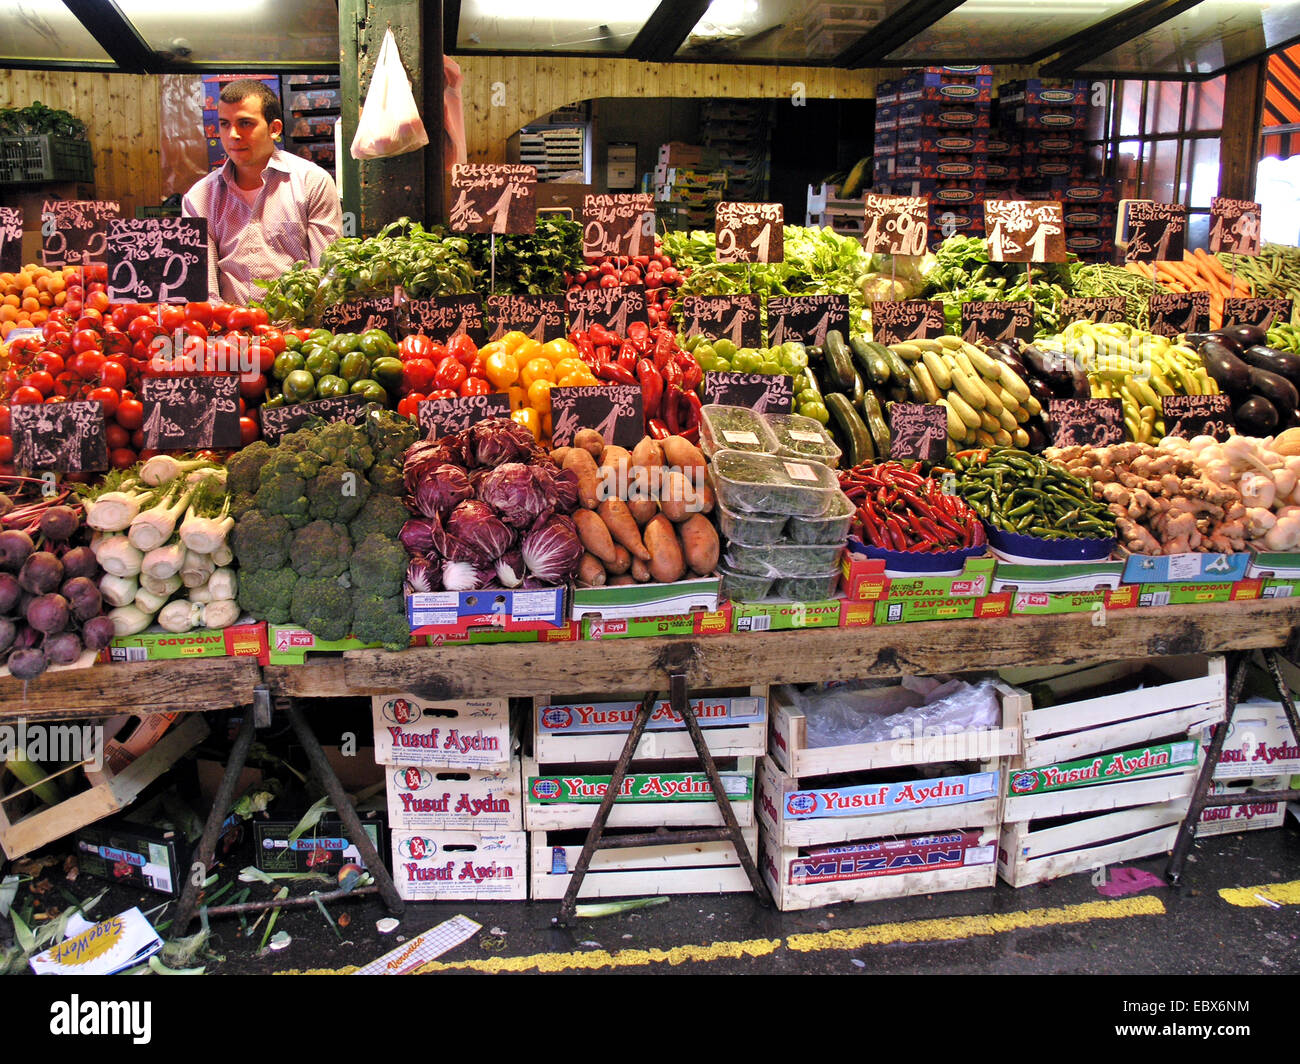 veg stall on a market, Austria, Naschmarkt, Vienna Stock Photo